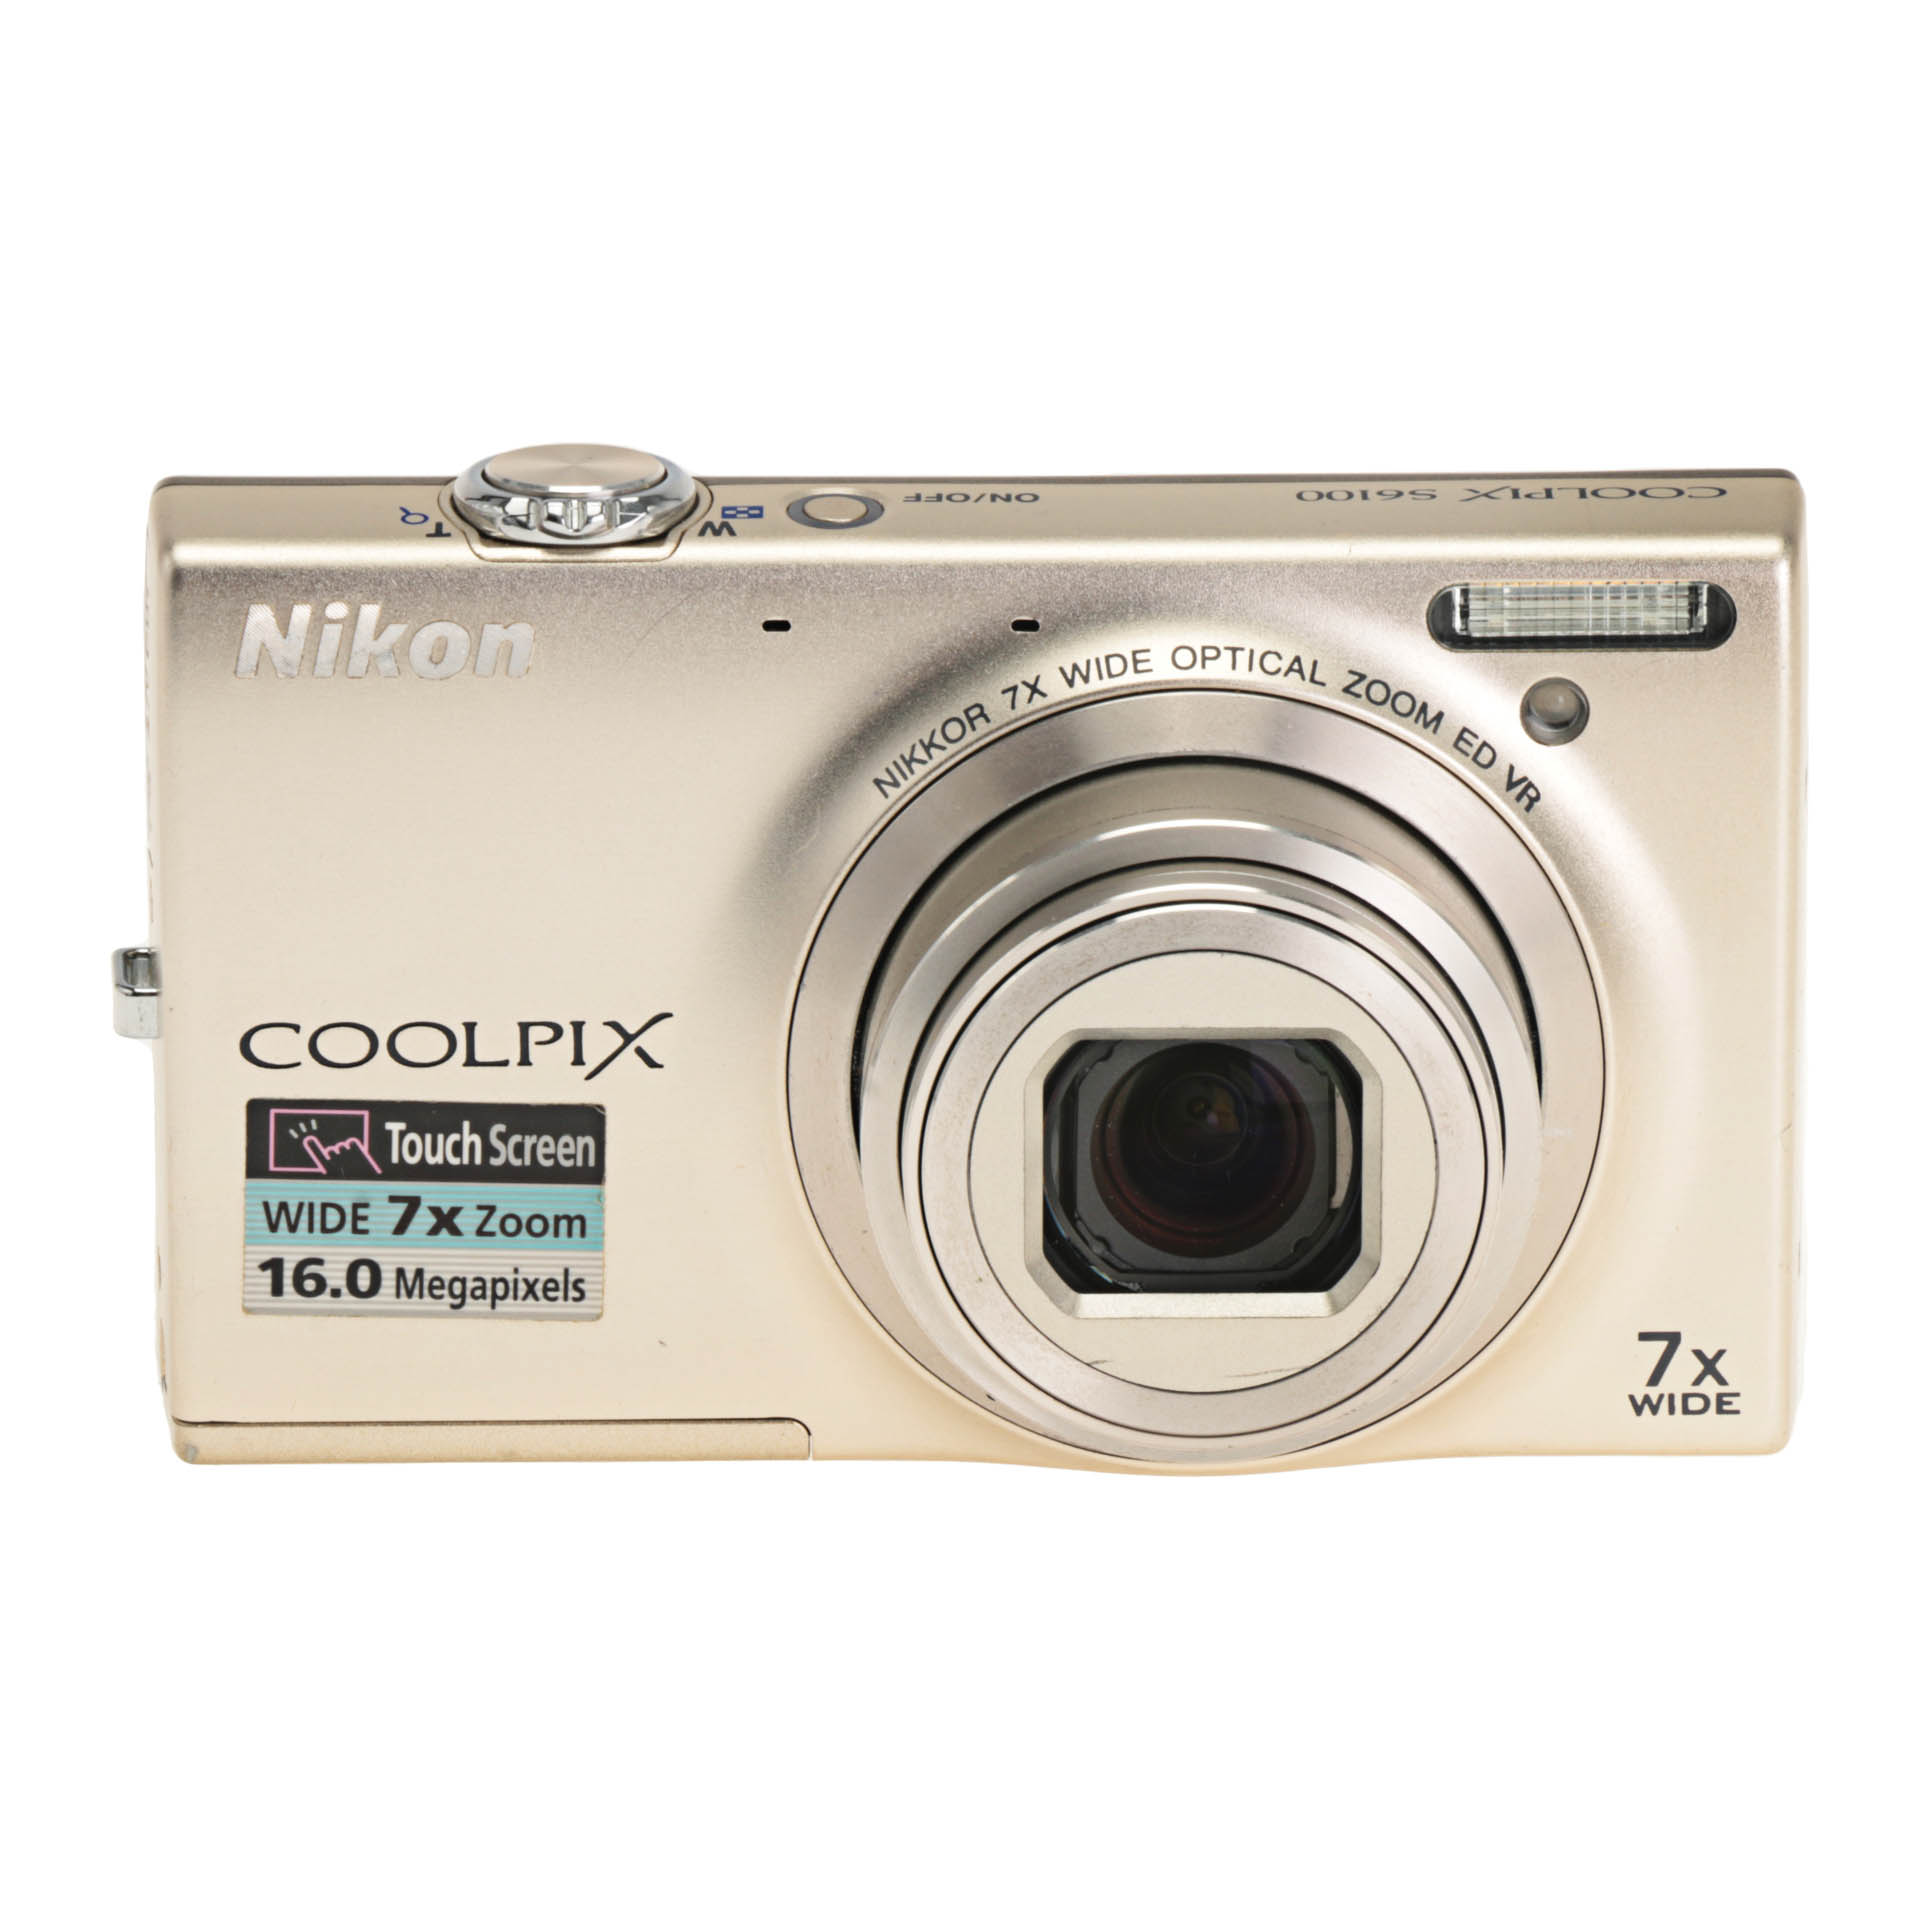 Continentaal paling inleveren Buy NIKON COOLPIX S6100 silver - National Camera Exchange